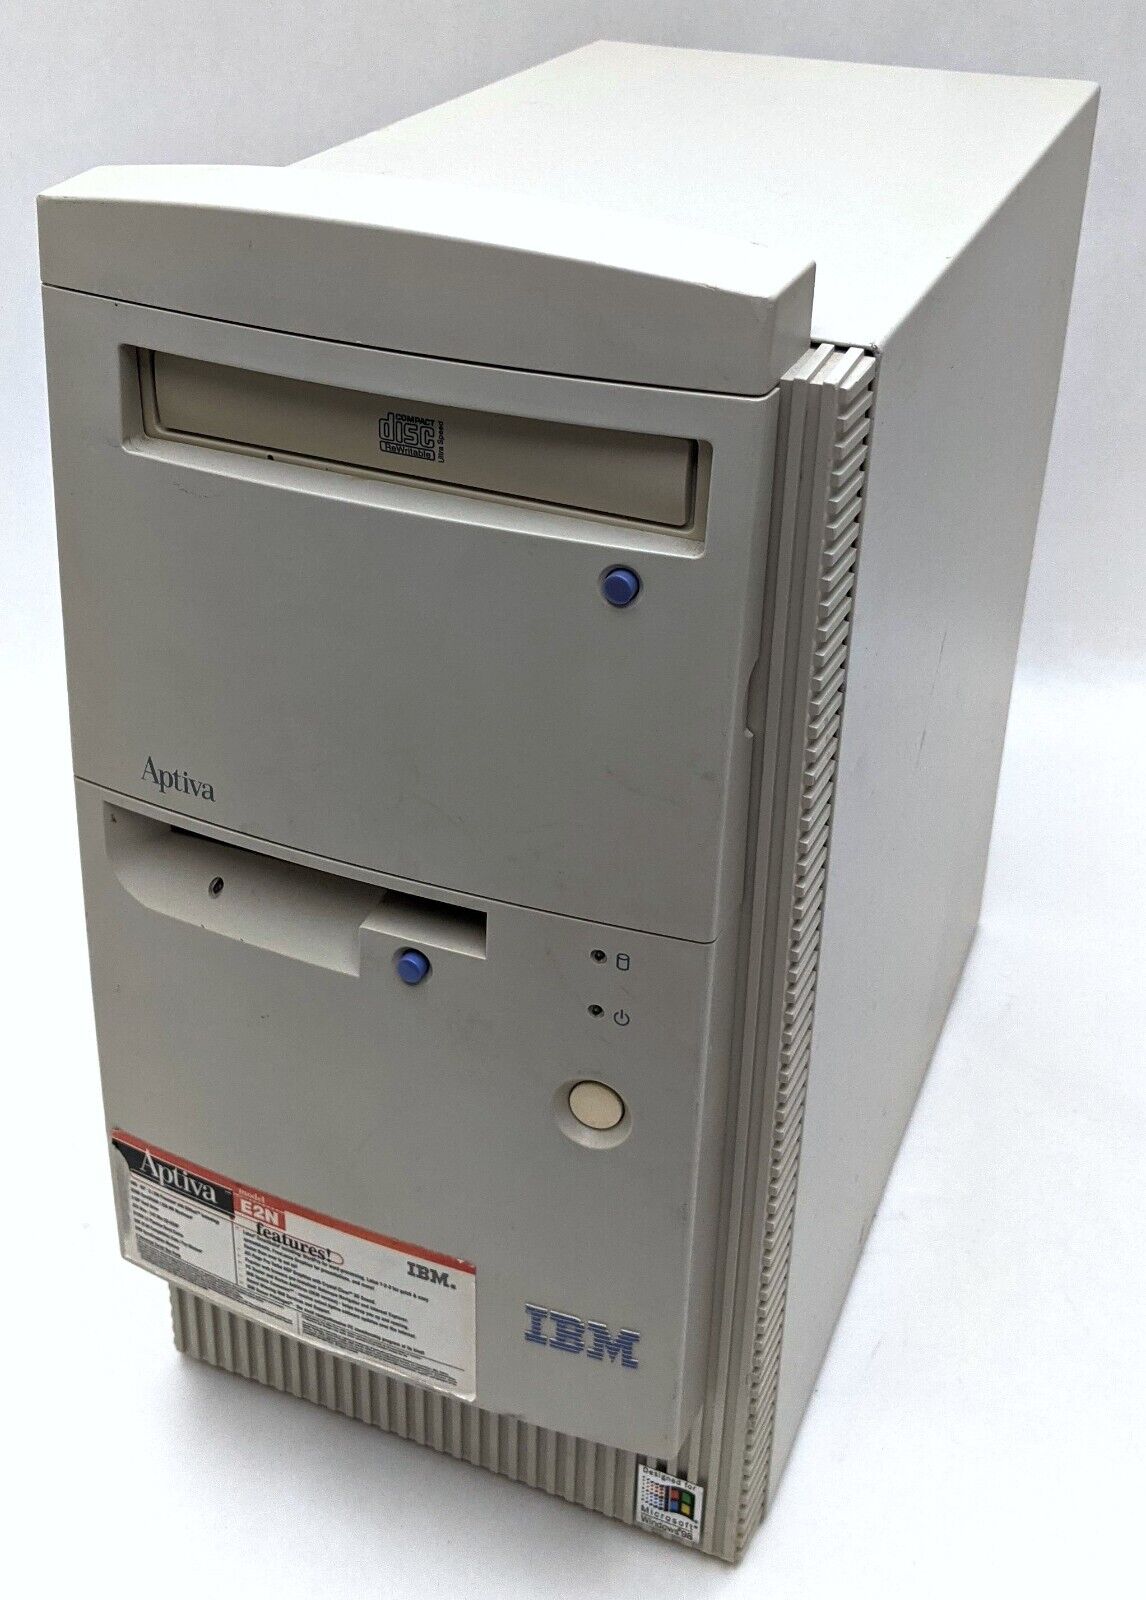 VTG IBM Aptiva 2153 E2N Desktop AMD K6-2 233 MHz 512MB RAM 341MB HDD ATI Mach64